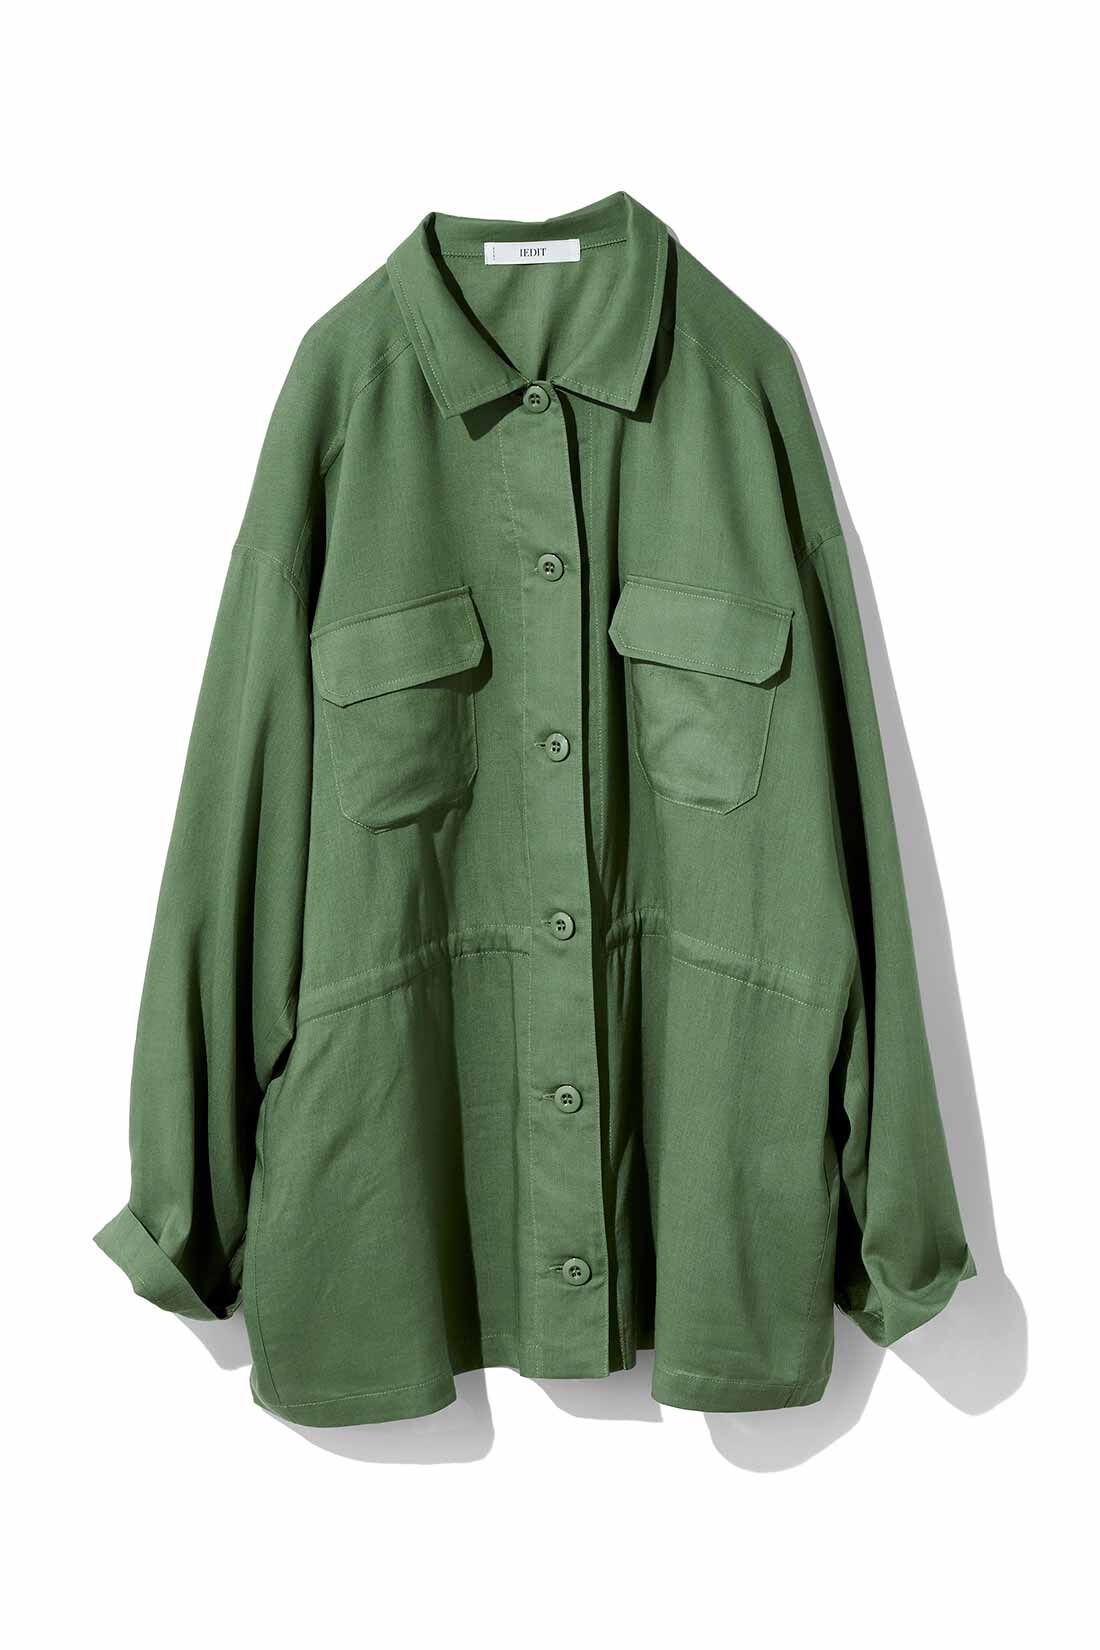 Real Stock|IEDIT[イディット]　リネン混素材のミリタリーシャツジャケット〈カーキグリーン〉|〈カーキグリーン〉